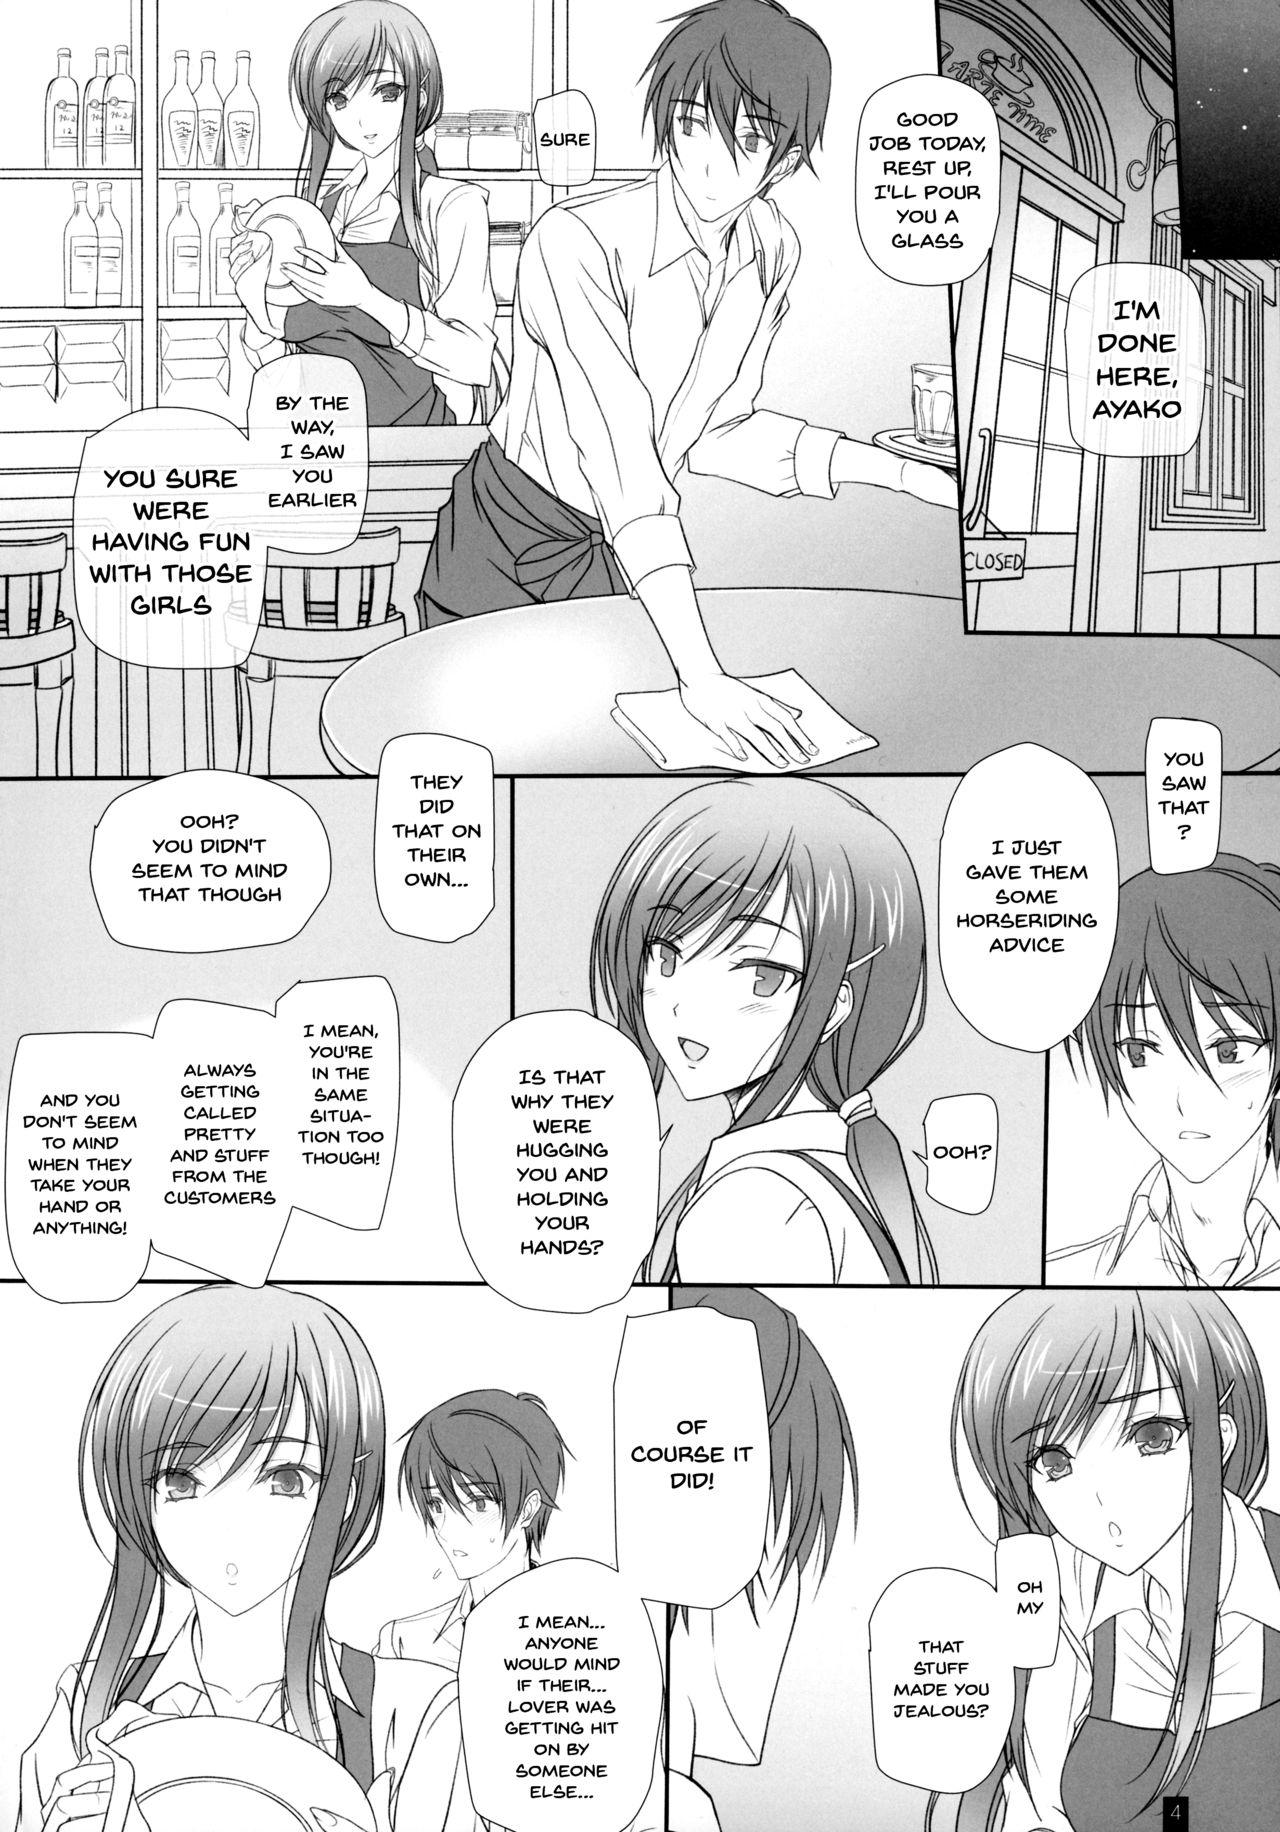 Bbc Oh! Ayako! More!&More!! - Walkure romanze Huge Tits - Page 3